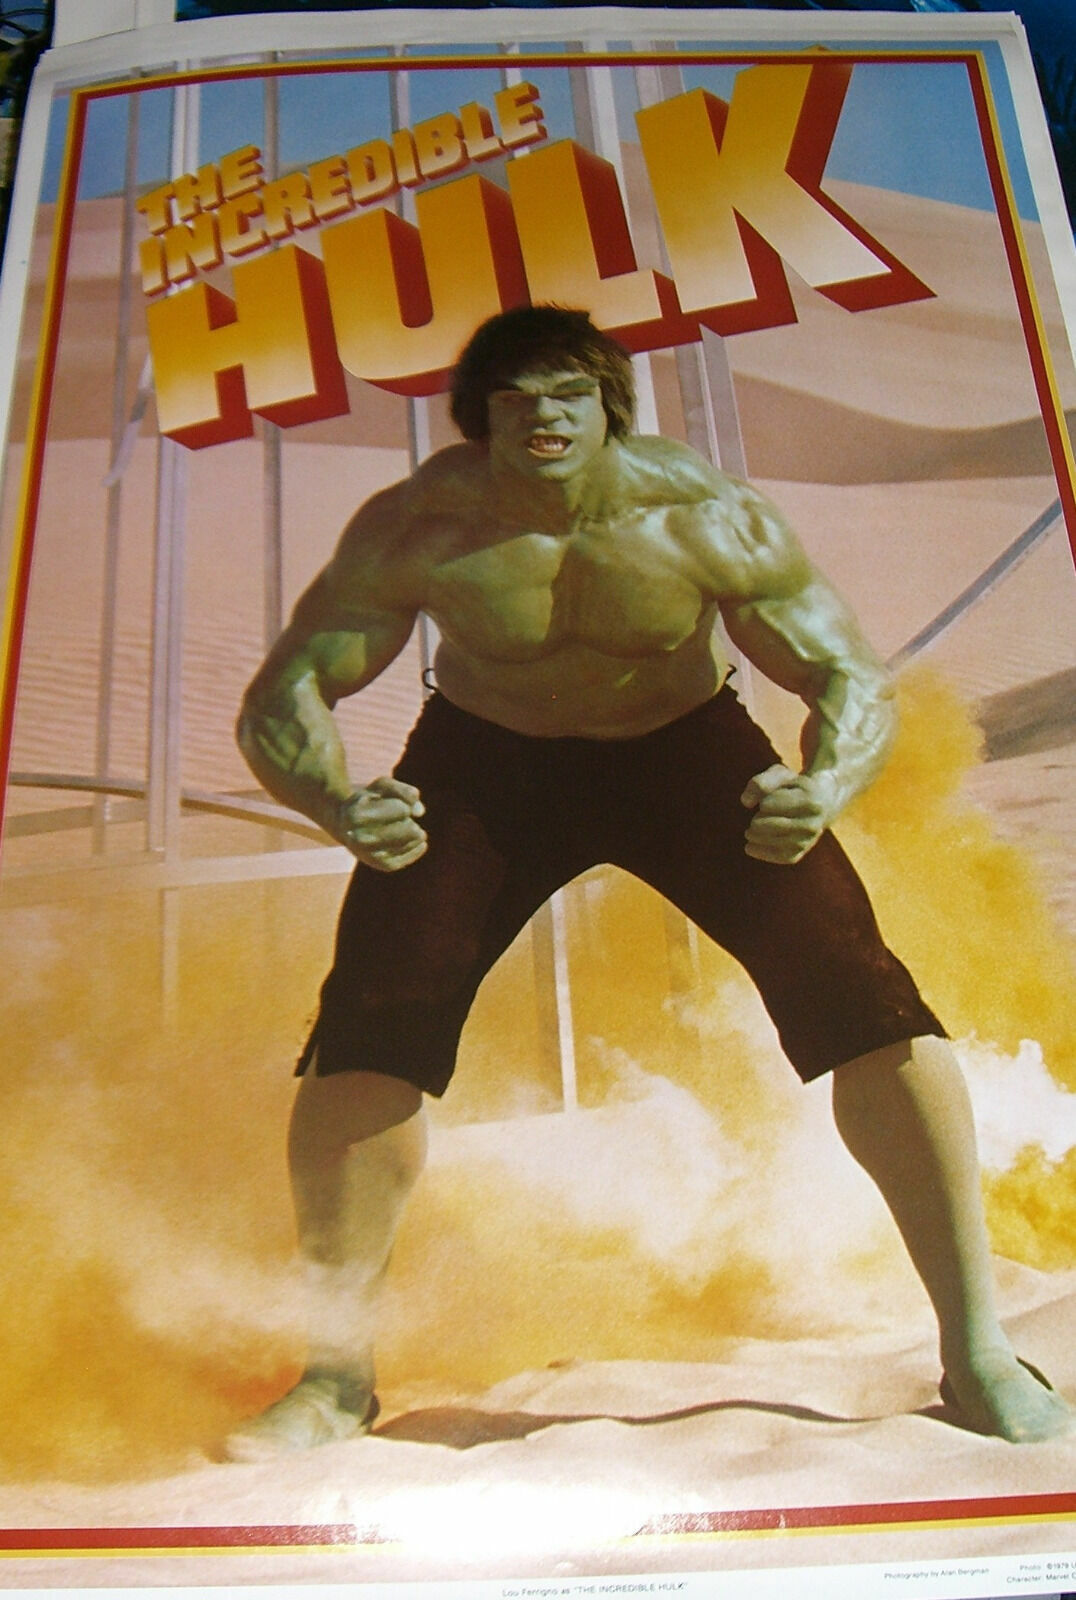 The Incredible Hulk Poster Thought Factory ORIGINAL NOS 1979 23x35 Marvel Comics